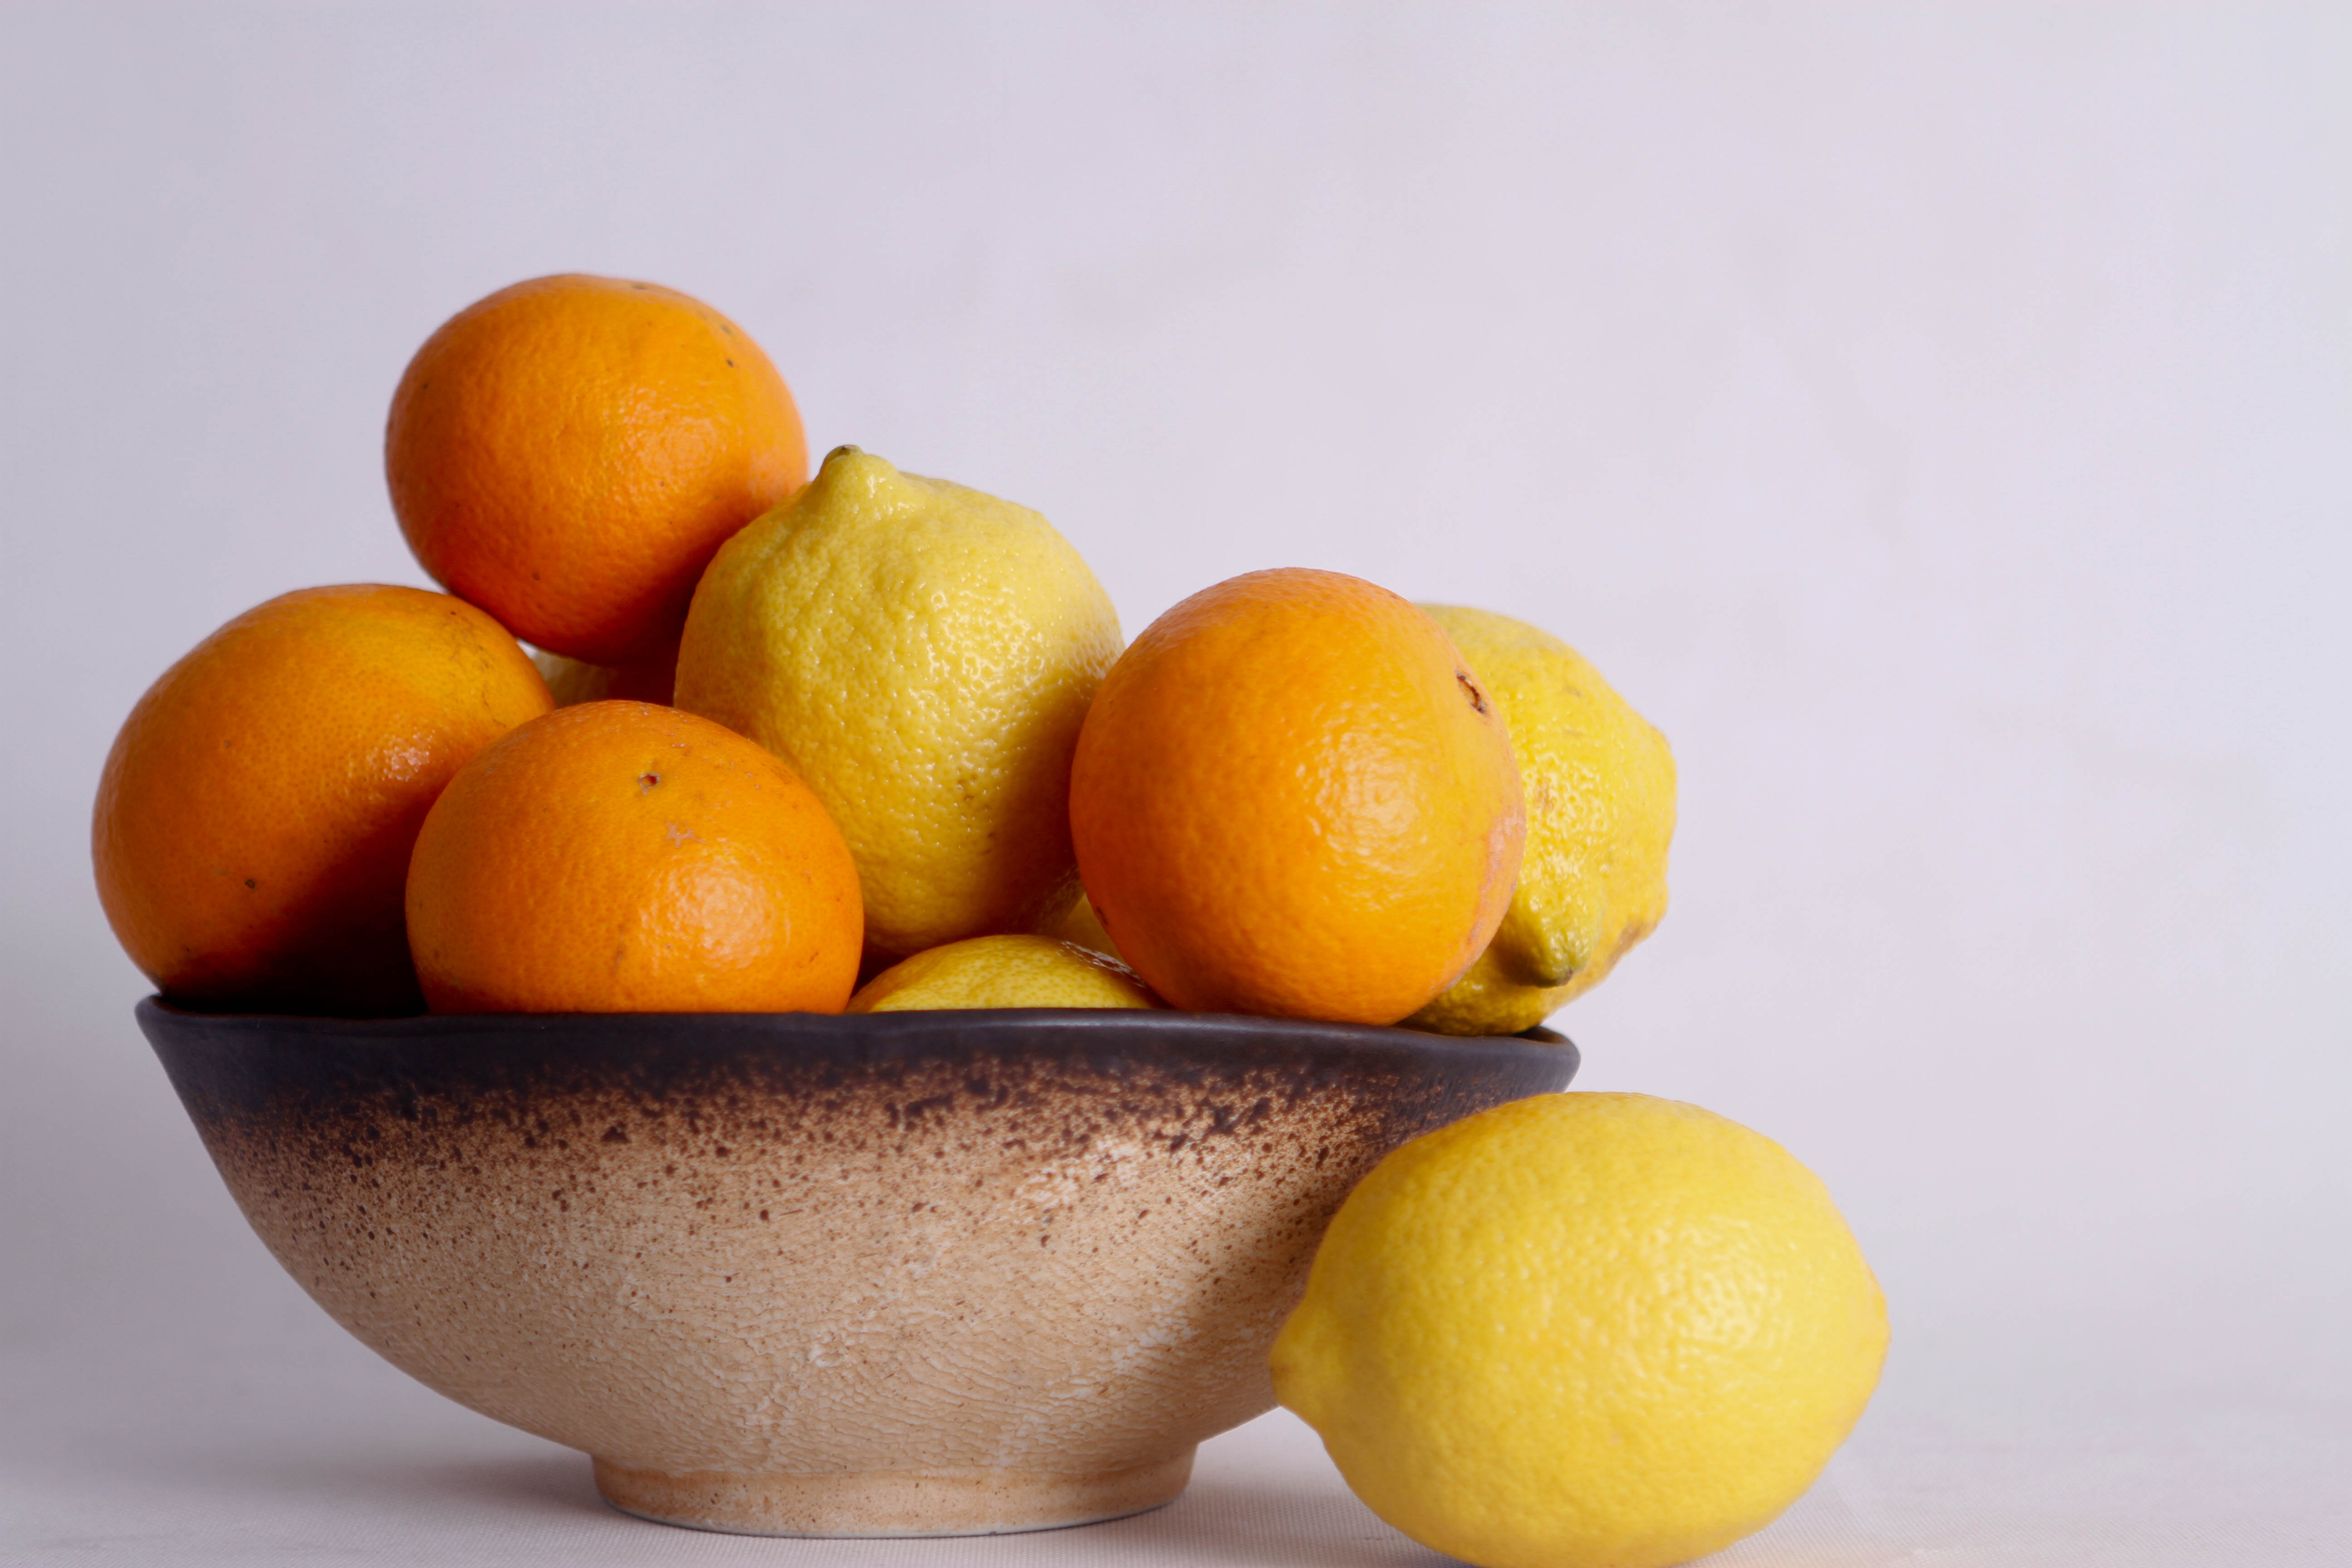 File:Oranges and Lemons.jpg - Wikimedia Commons